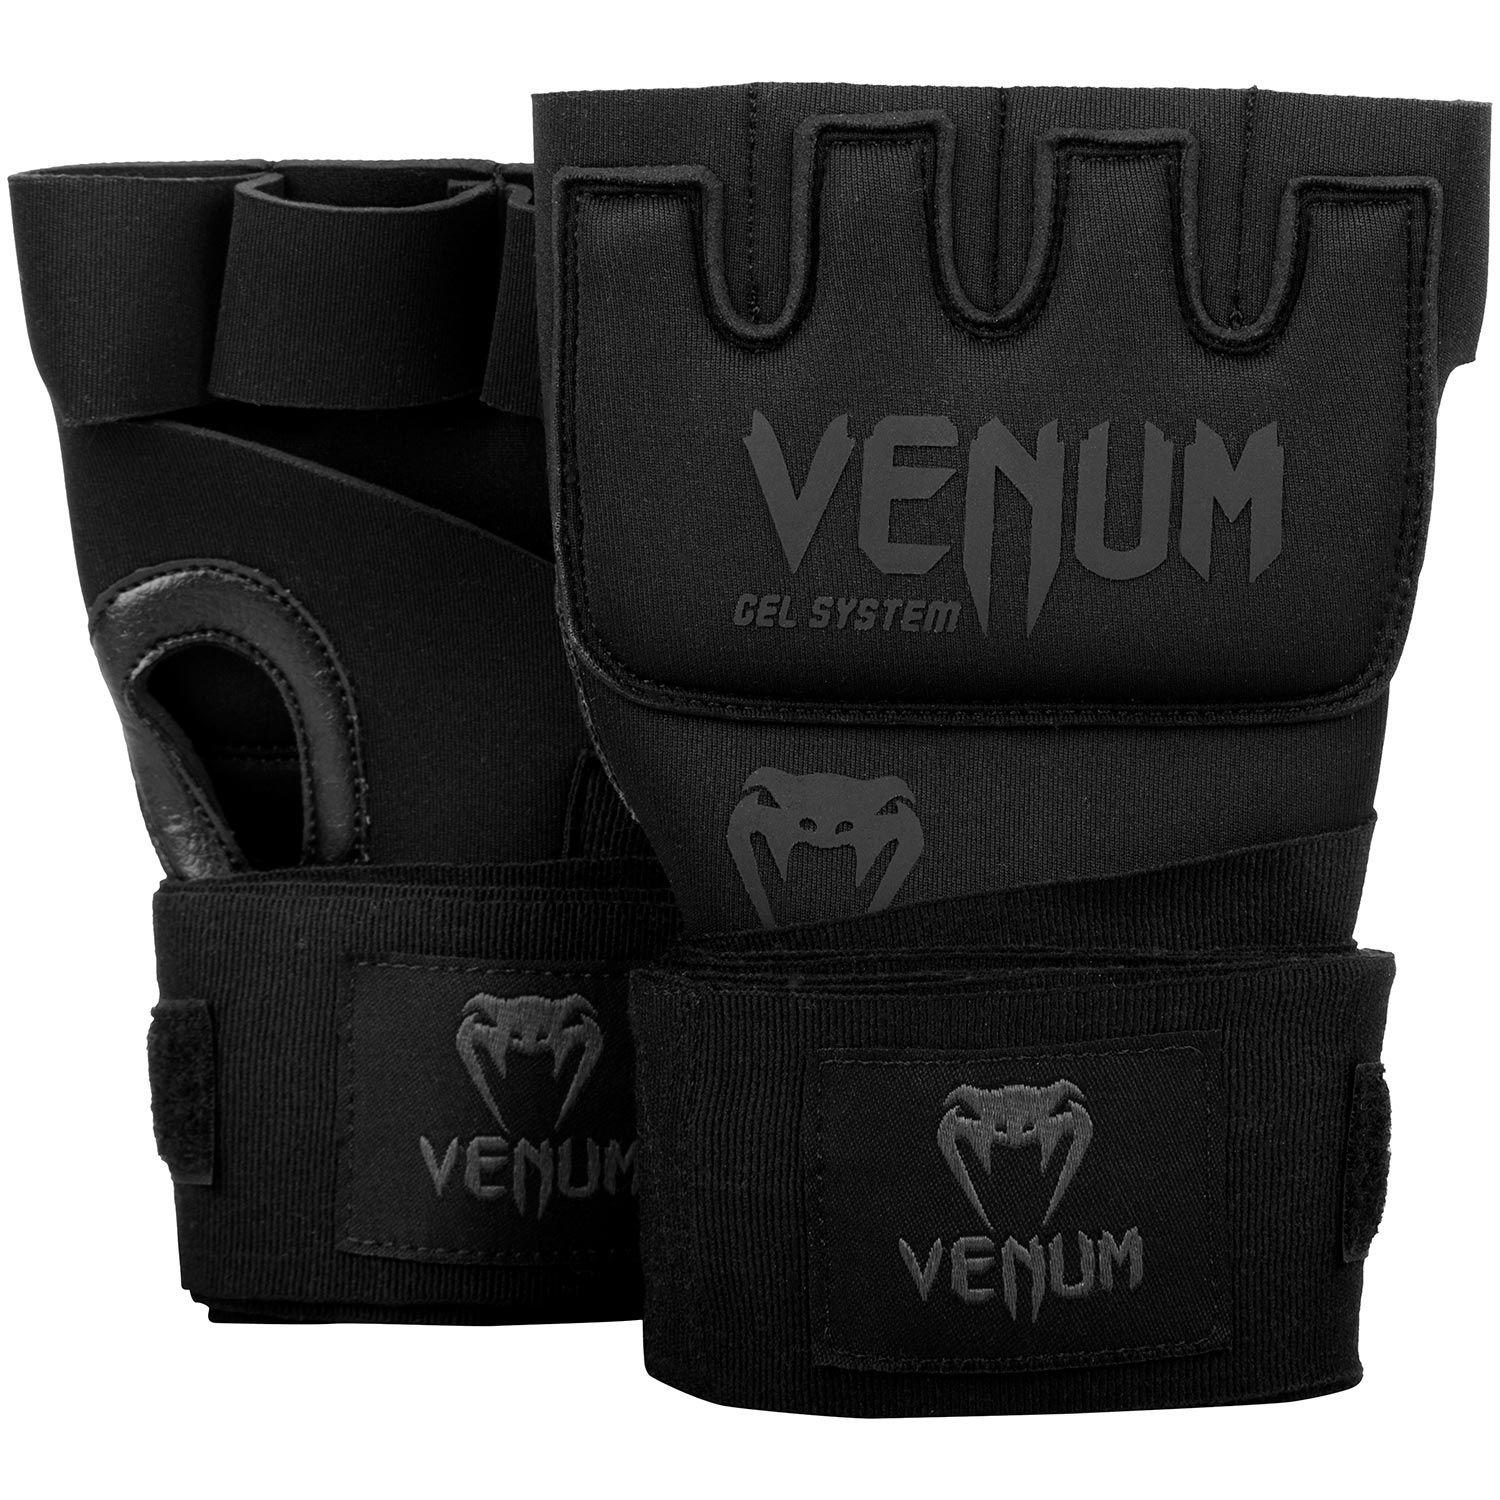 Sous gants Venum Kontact + gel